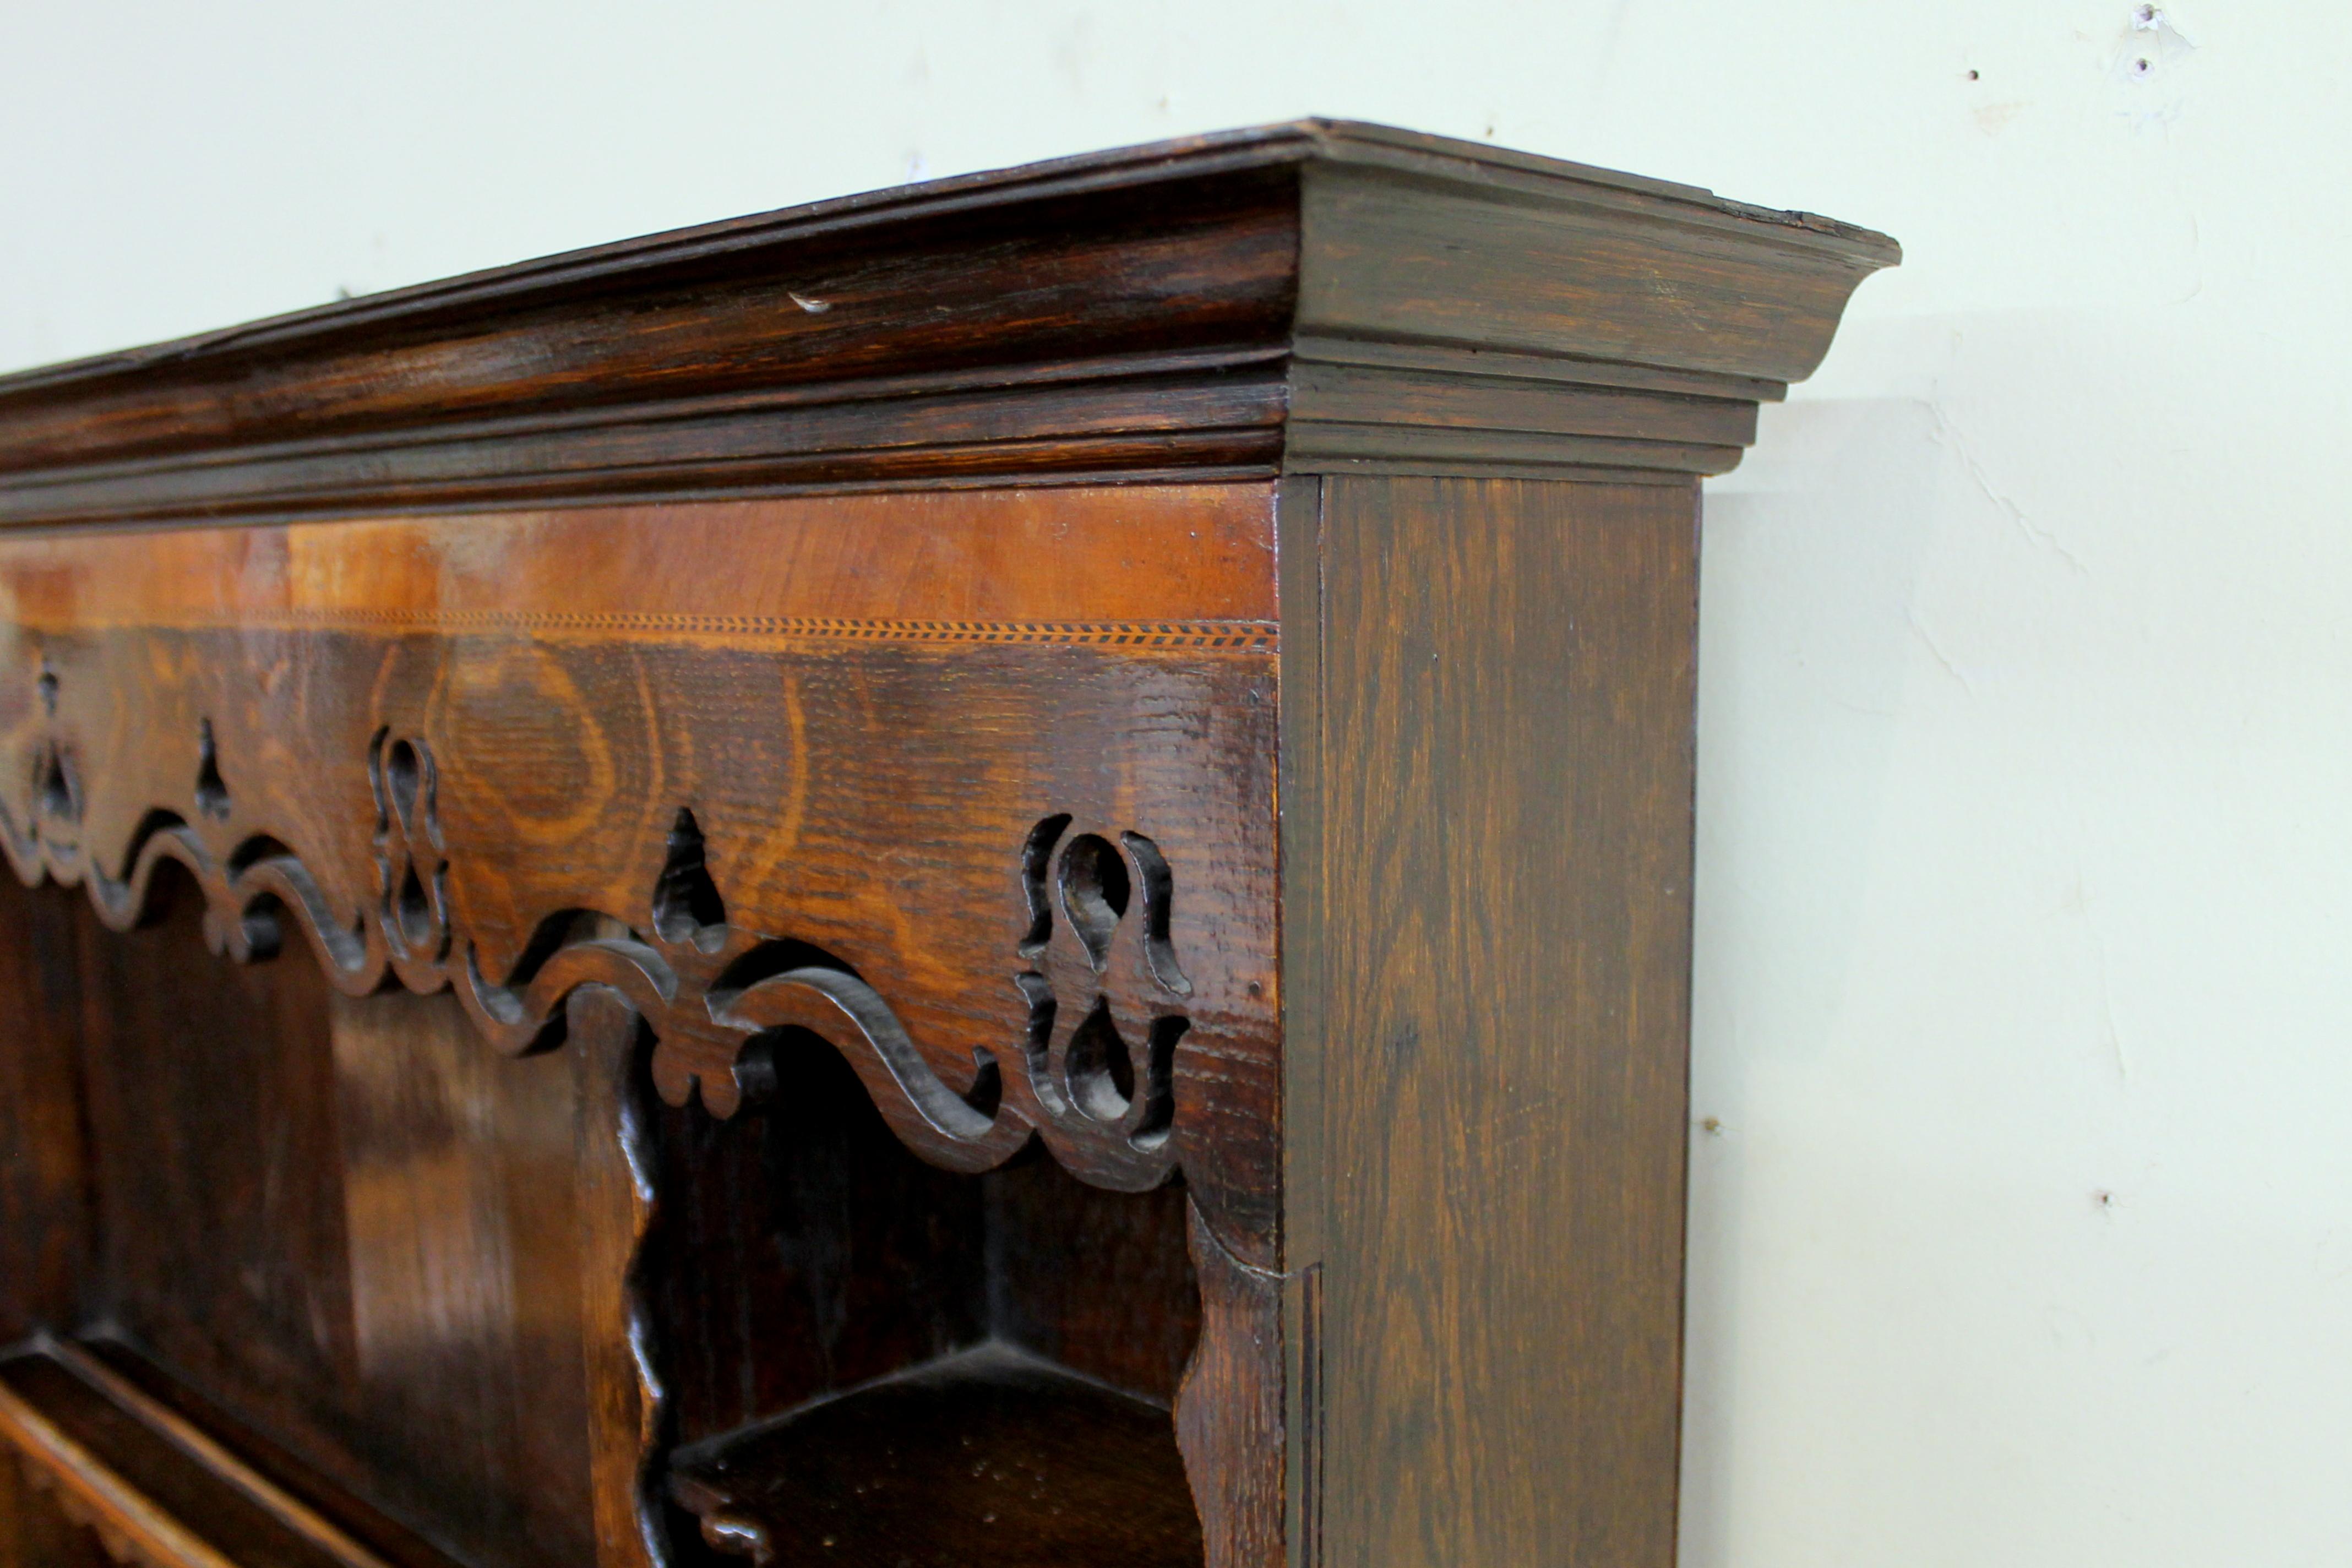 British Antique English Lancashire Region Oak Welsh Dresser and Rack with Carved Apron